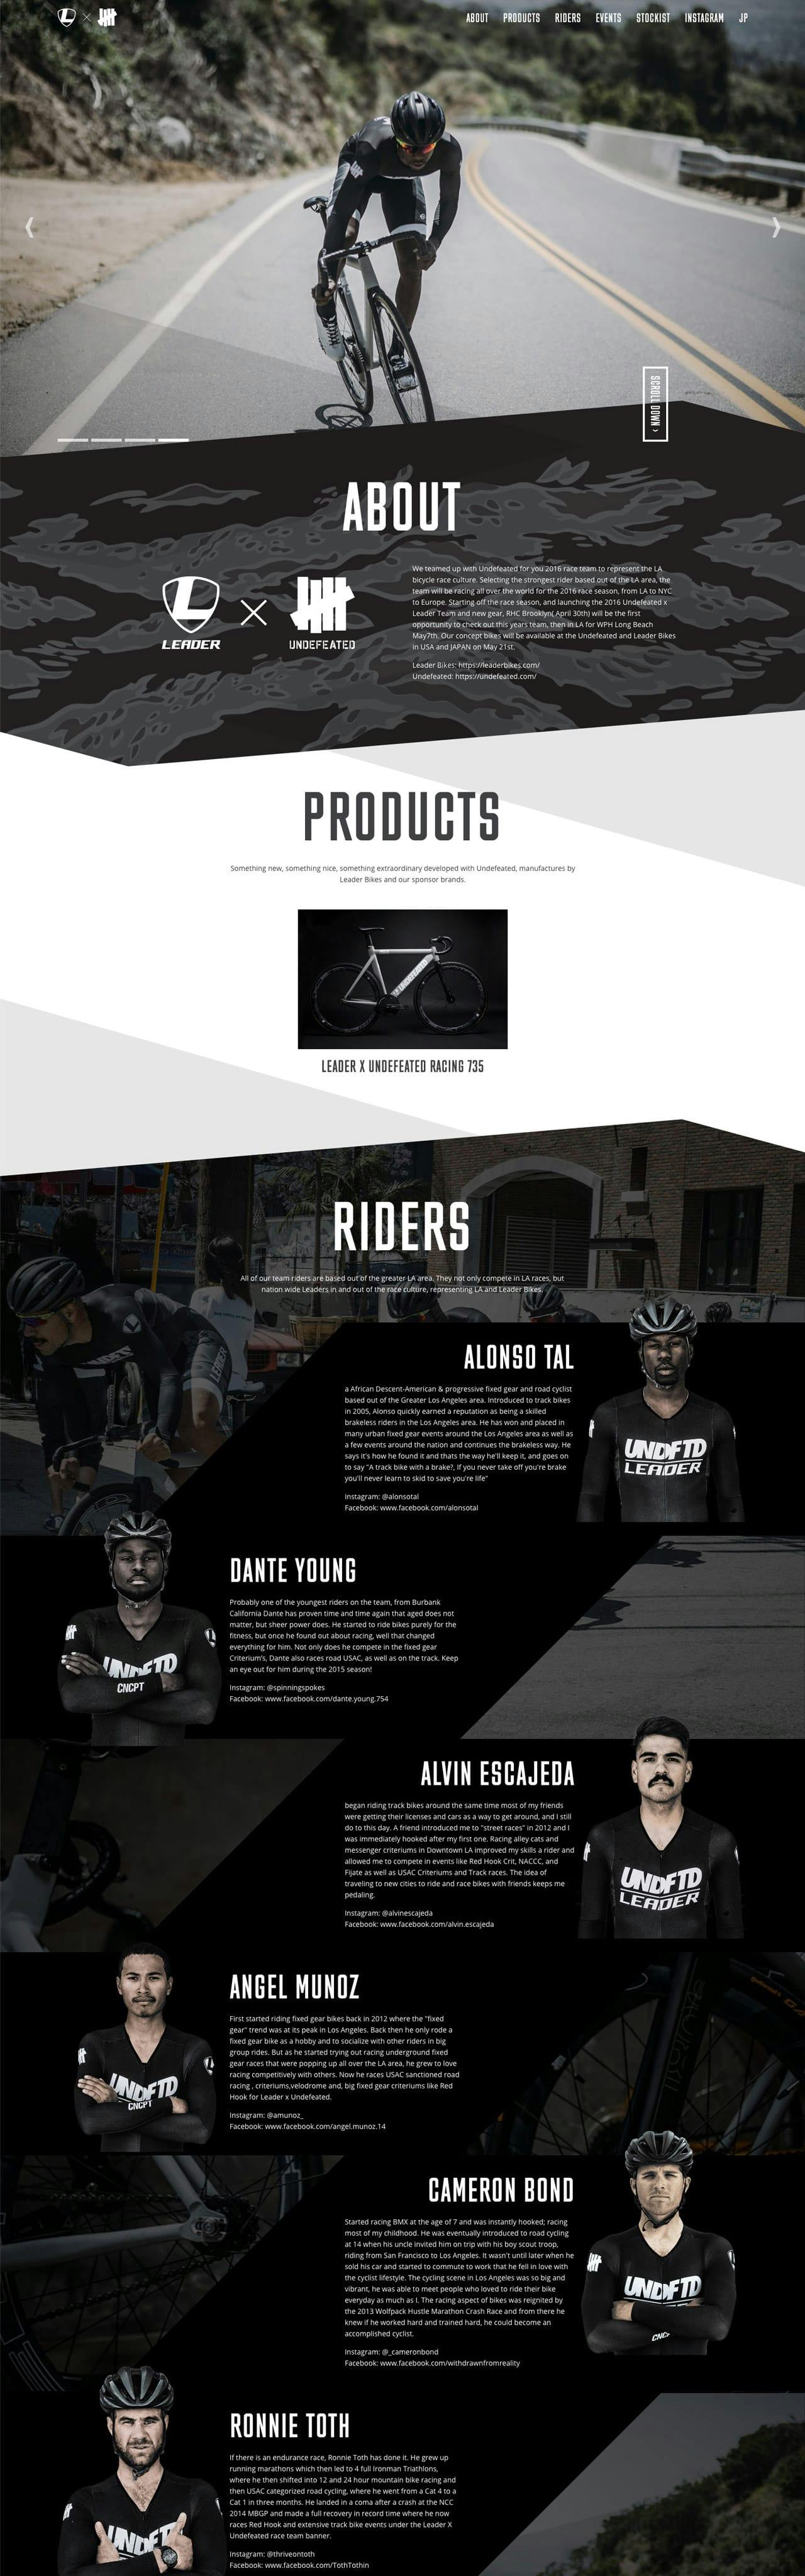 Leader Bikes x Undefeated racing team Website Screenshot